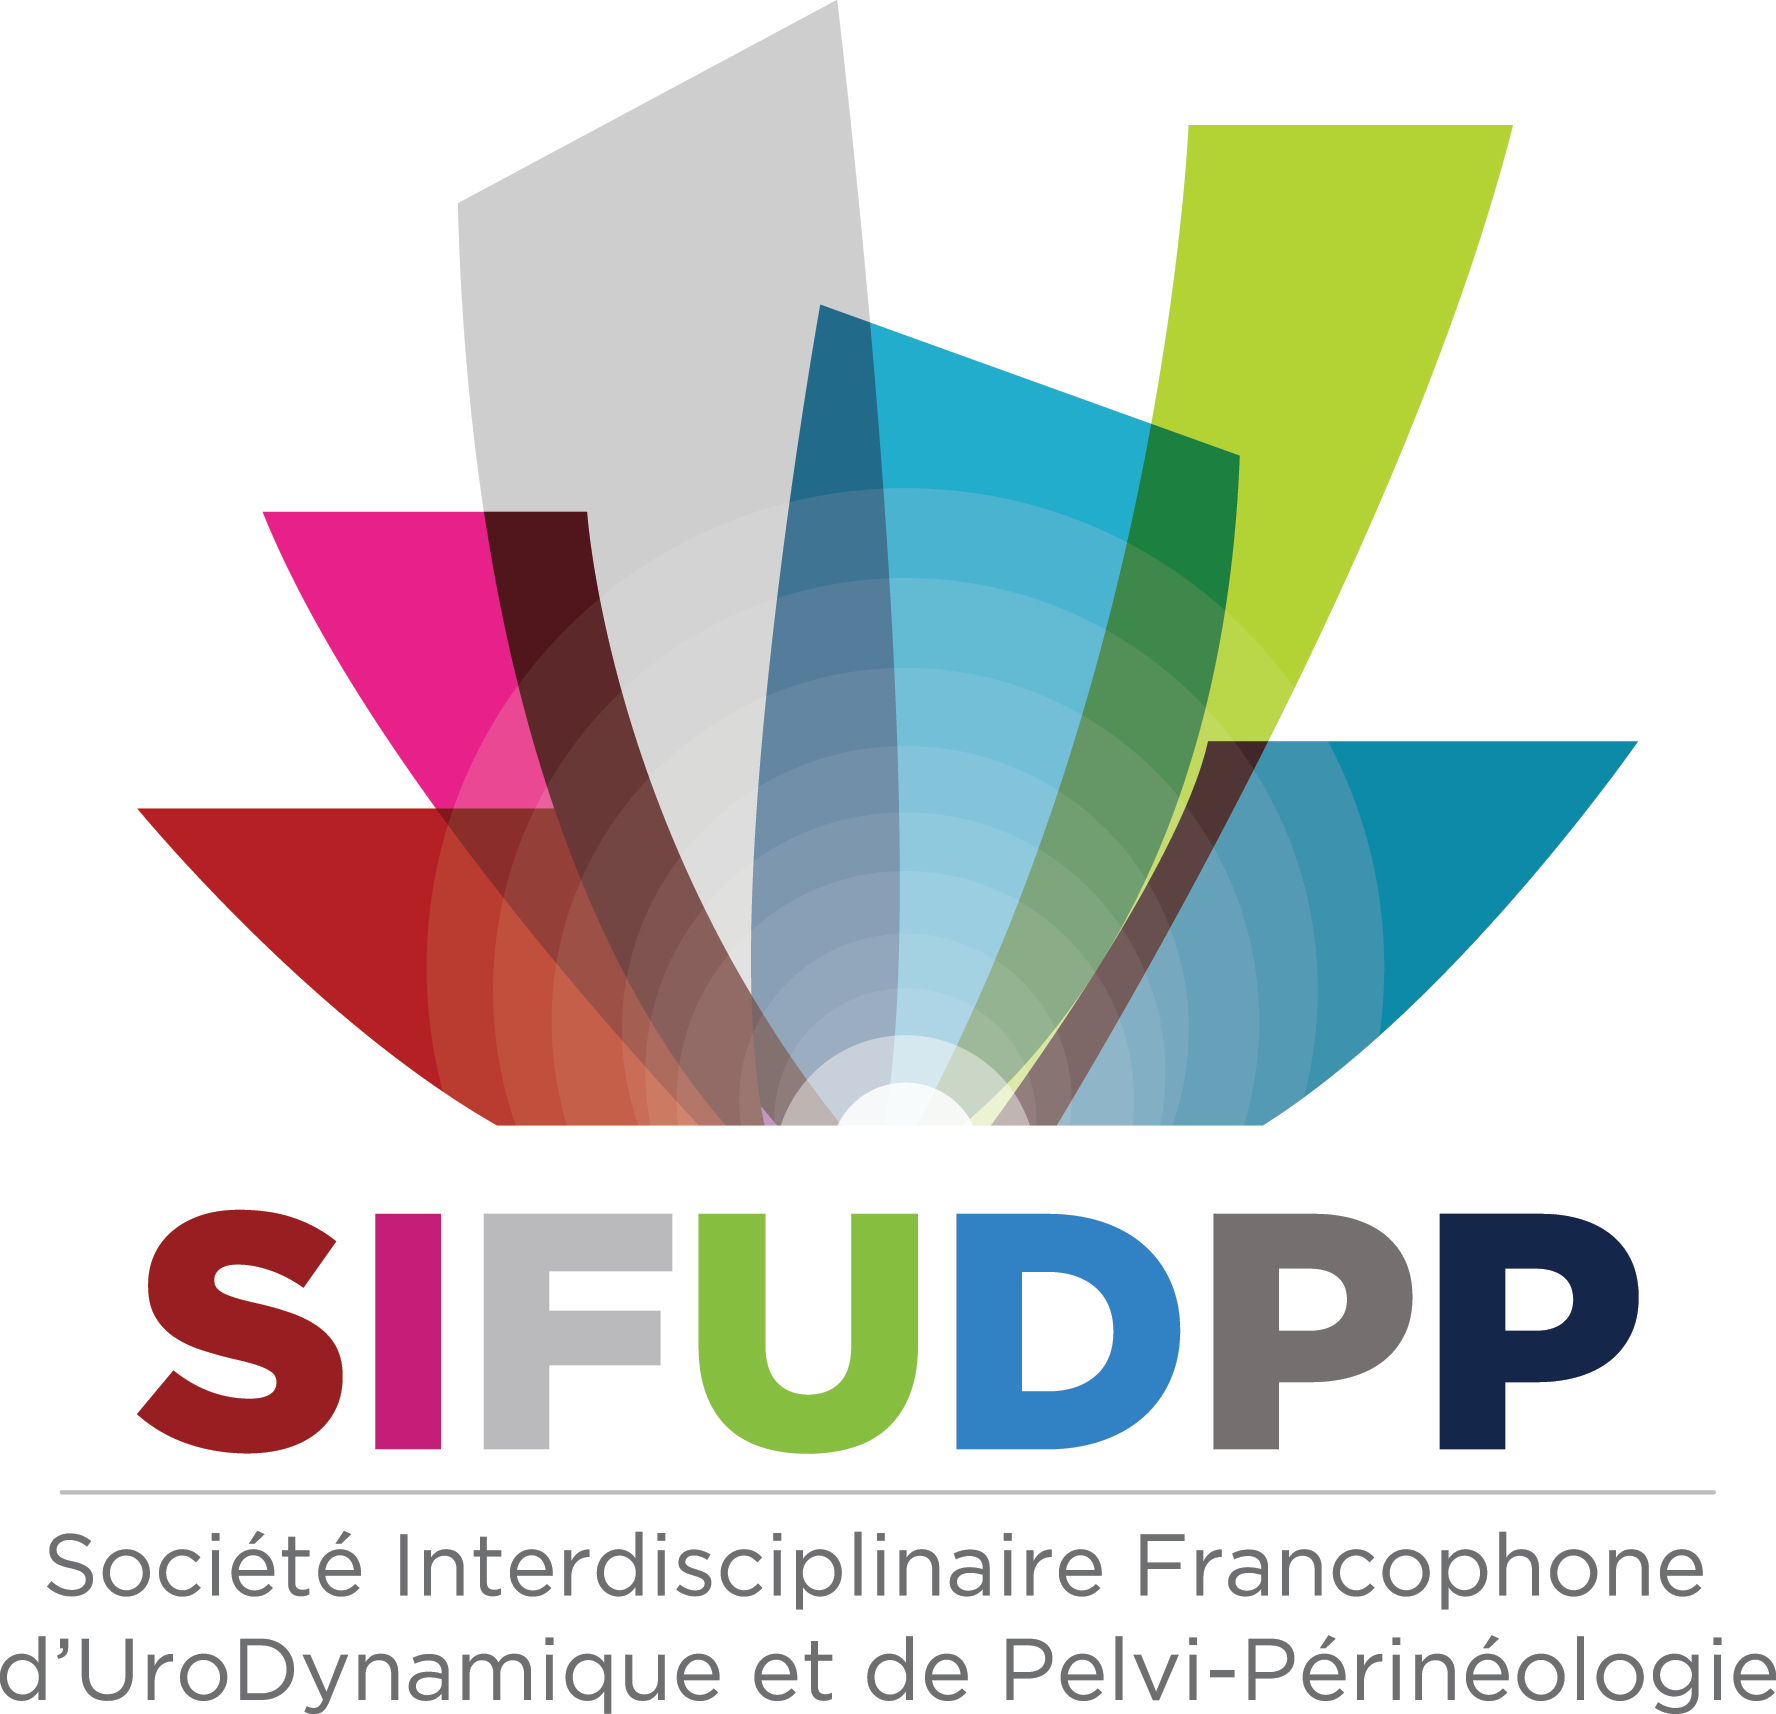 SIFUD-PP La Baule 2015 : Rapport du congrès